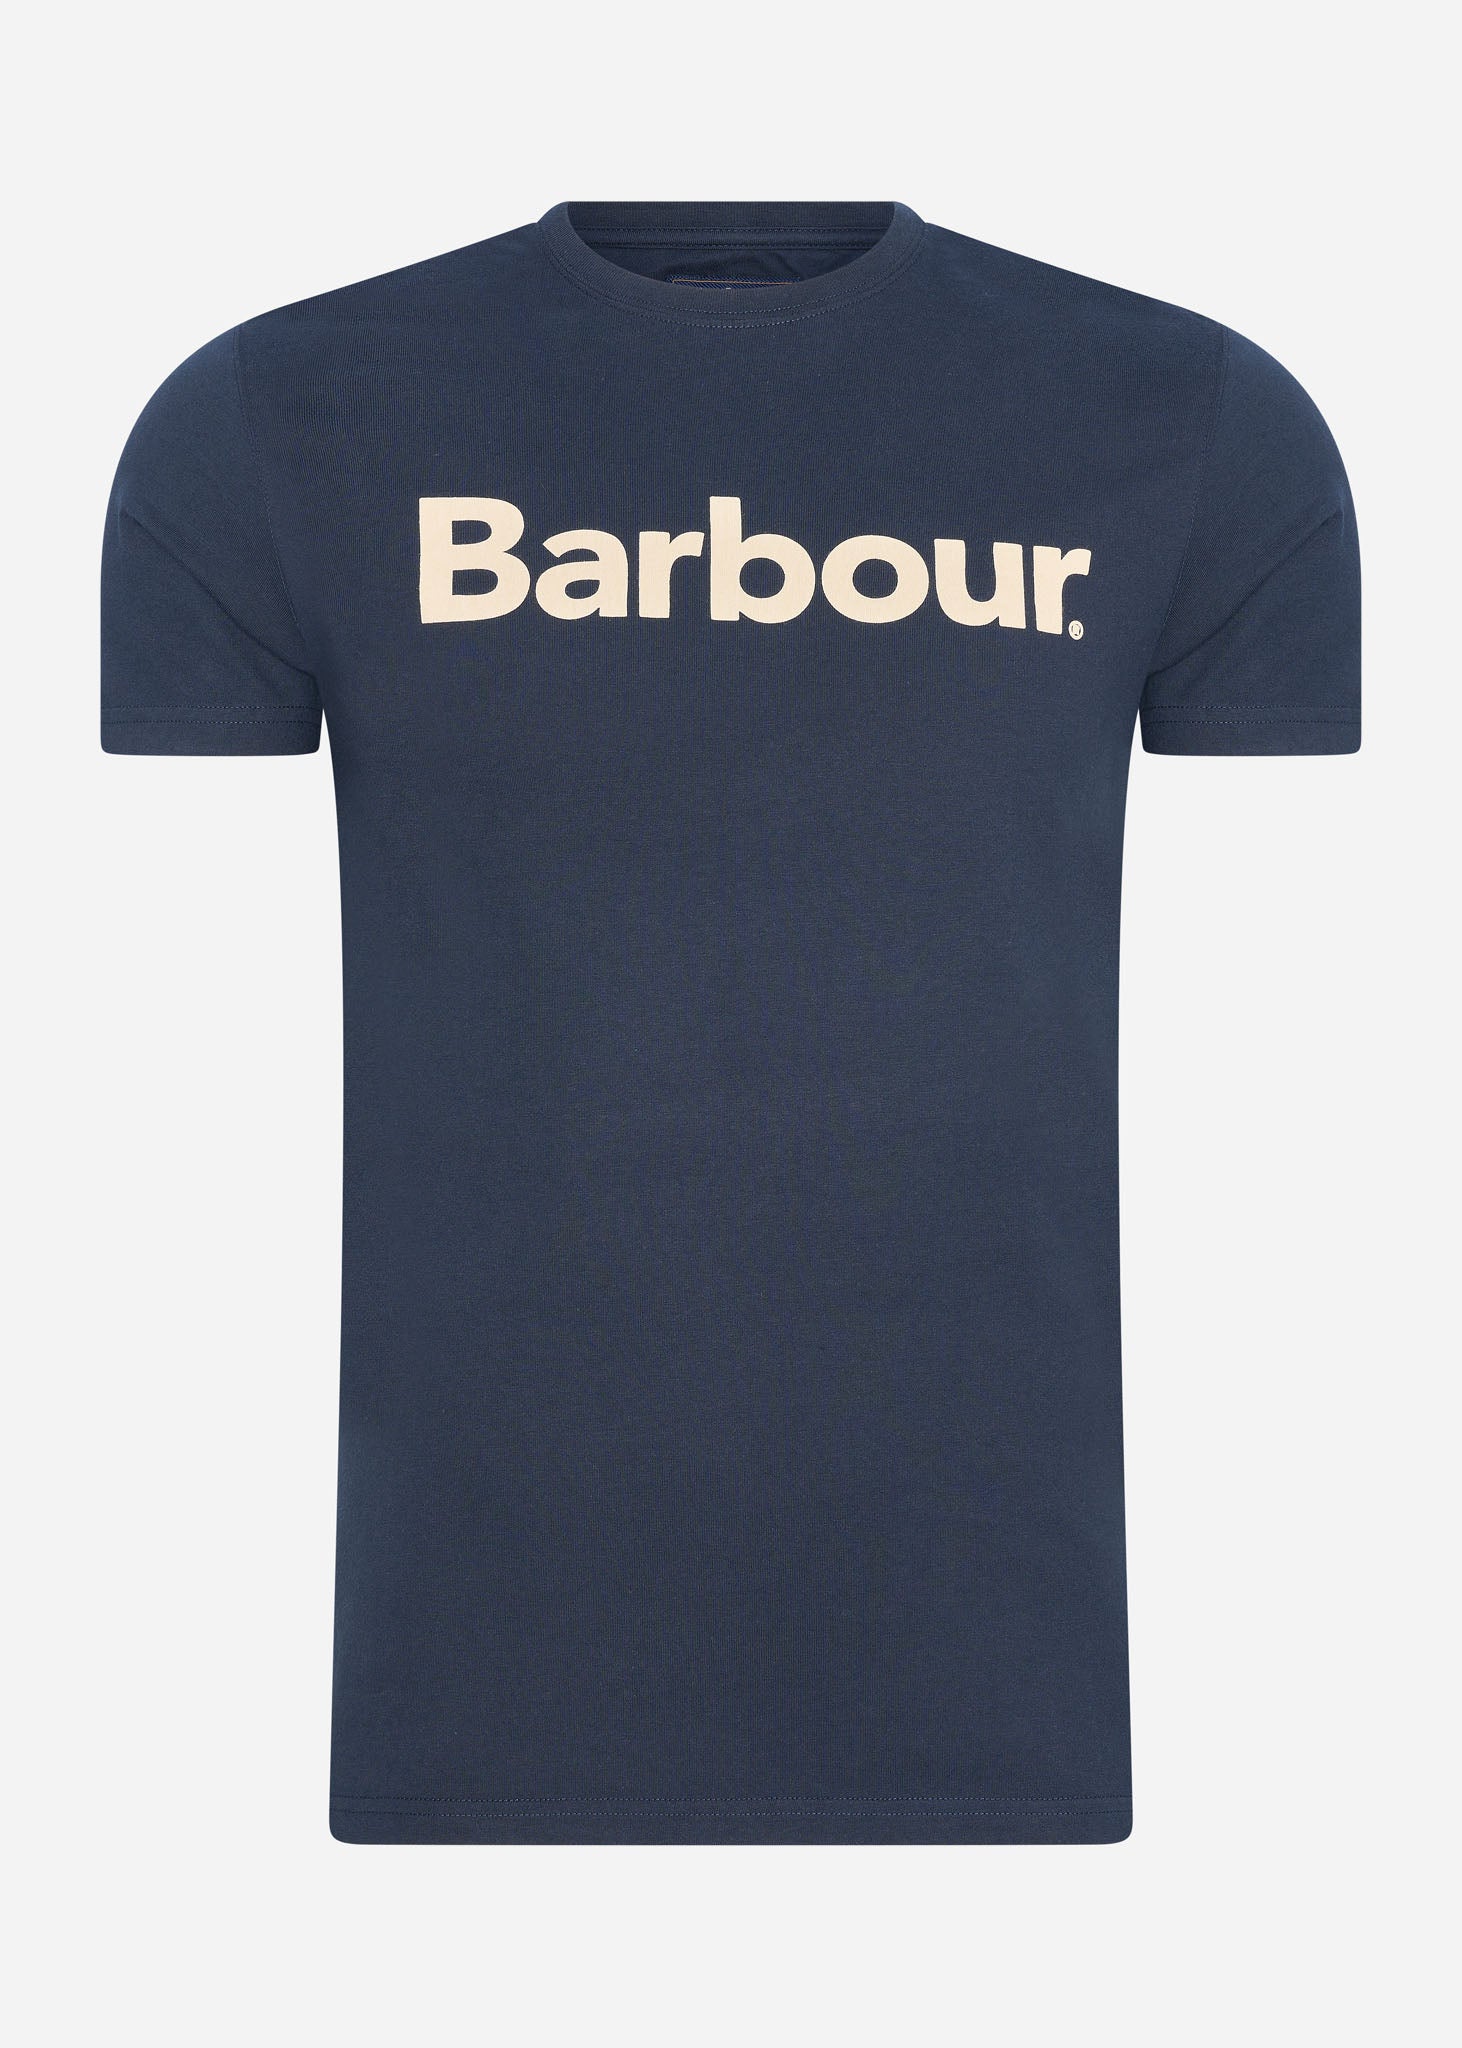 Barbour logo t-shirt navy